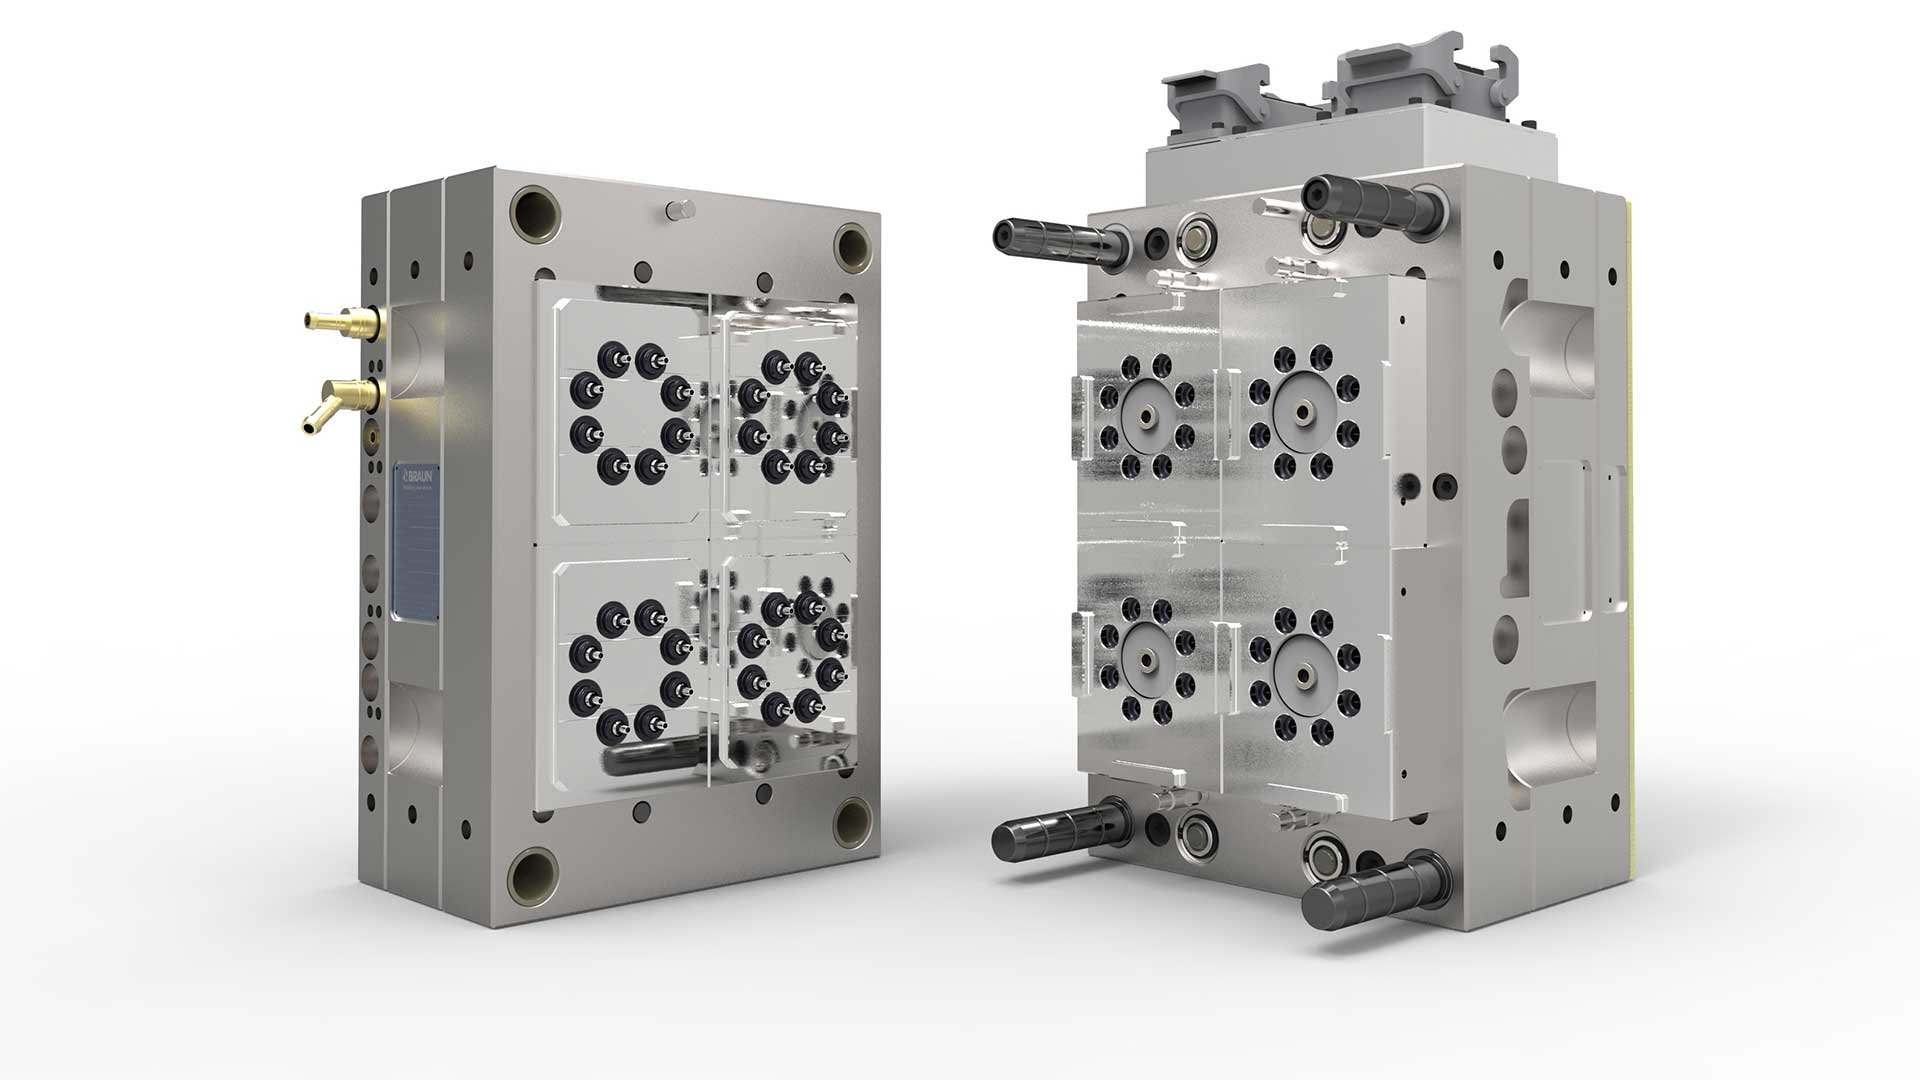 Example Multi-cavity mold | © Braunform GmbH